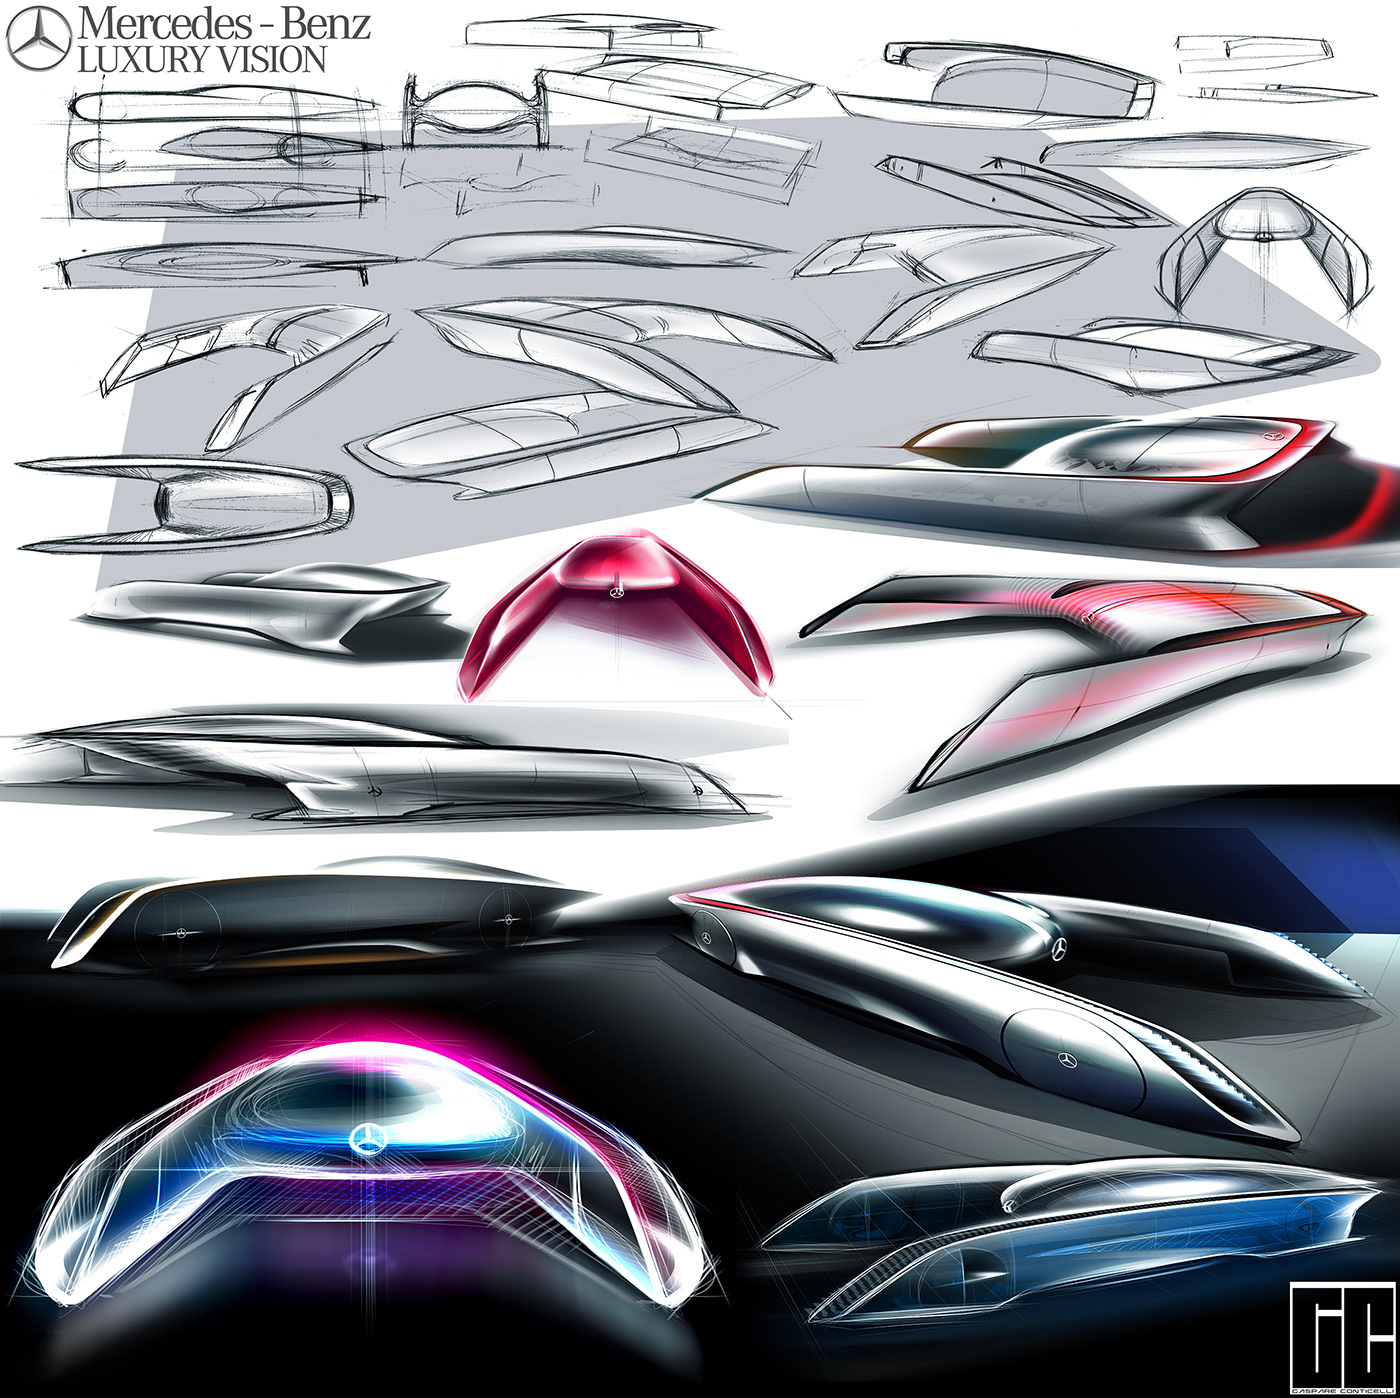 car cardesign conceptcar conticelli innovation luxury Mercedes Benz trasportationdesign